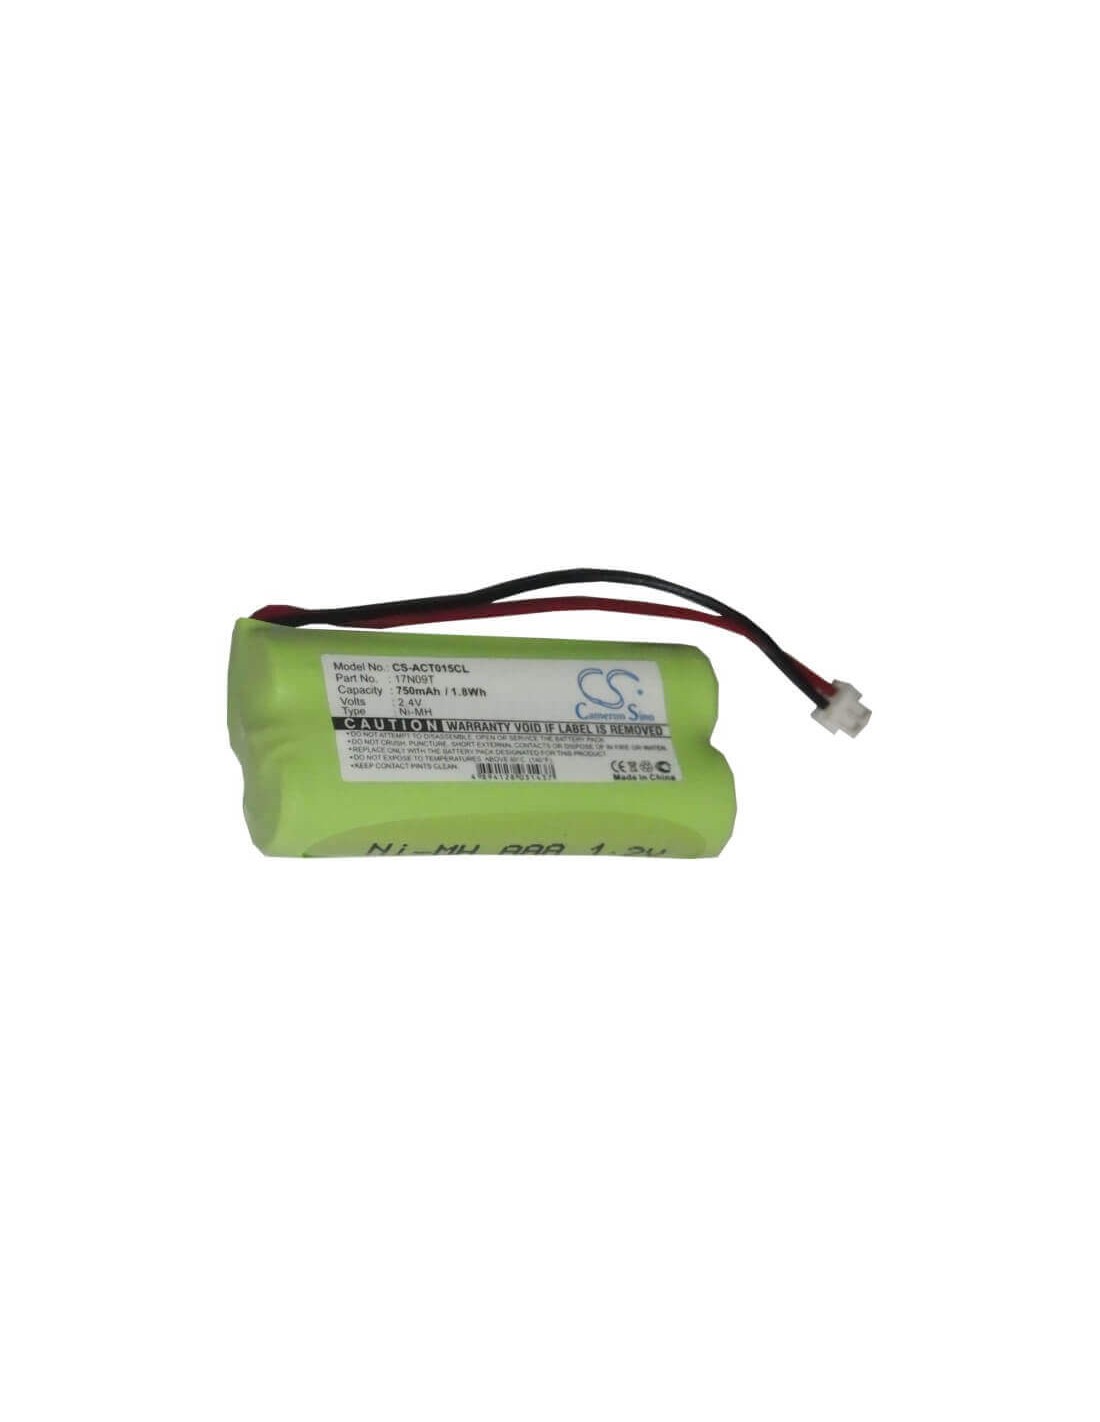 Battery for Geemarc, Cc40, Cc50, Cc60 2.4V, 750mAh - 1.80Wh